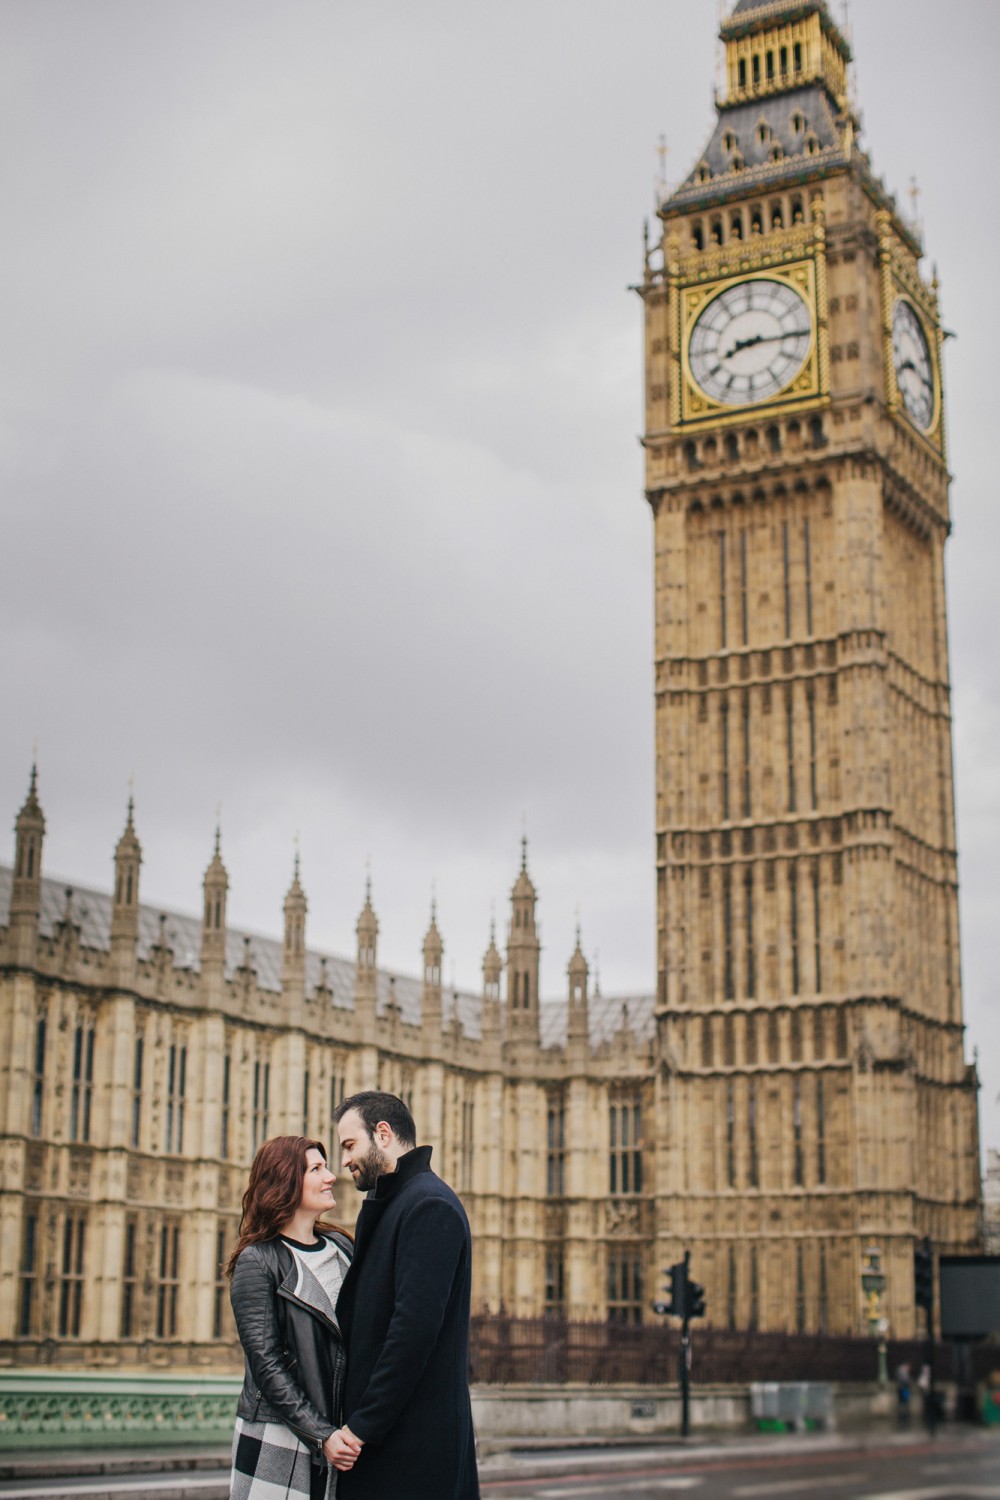 Pre-Wedding photoshoot in London - Nafsika & Spyros